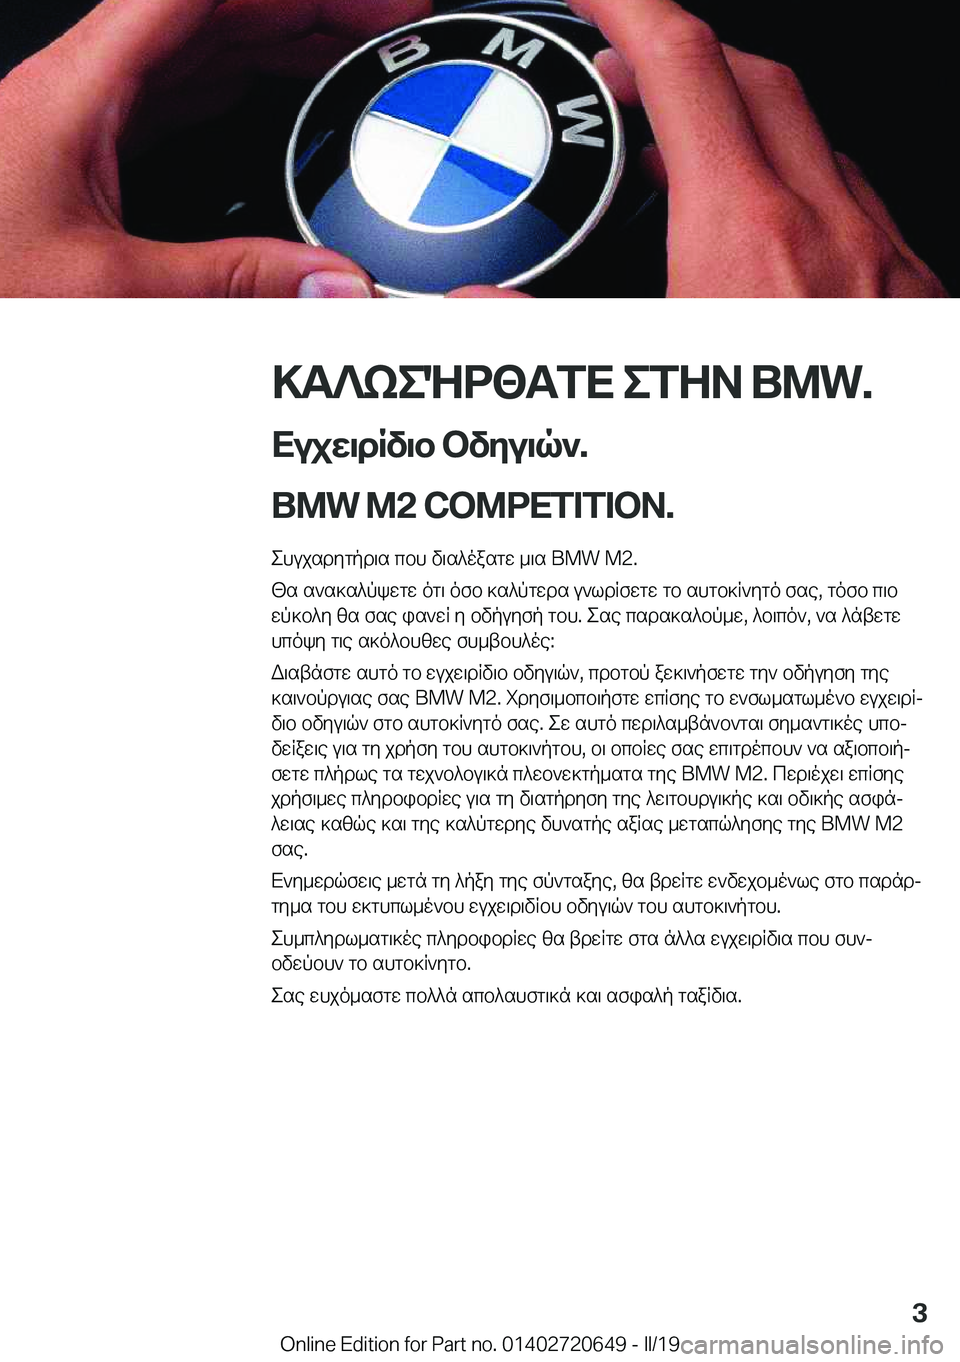 BMW M2 2020  ΟΔΗΓΌΣ ΧΡΉΣΗΣ (in Greek) >T?keNd<TfX�efZA��B�M�W�.
XujX\dRv\b�bvZu\q`�.
�B�M�W��M�2��C�O�M�P�E�T�I�T�I�O�N�.� ehujsdygpd\s�cbh�v\s^oasgw�_\s��B�M�W��M�2�.
